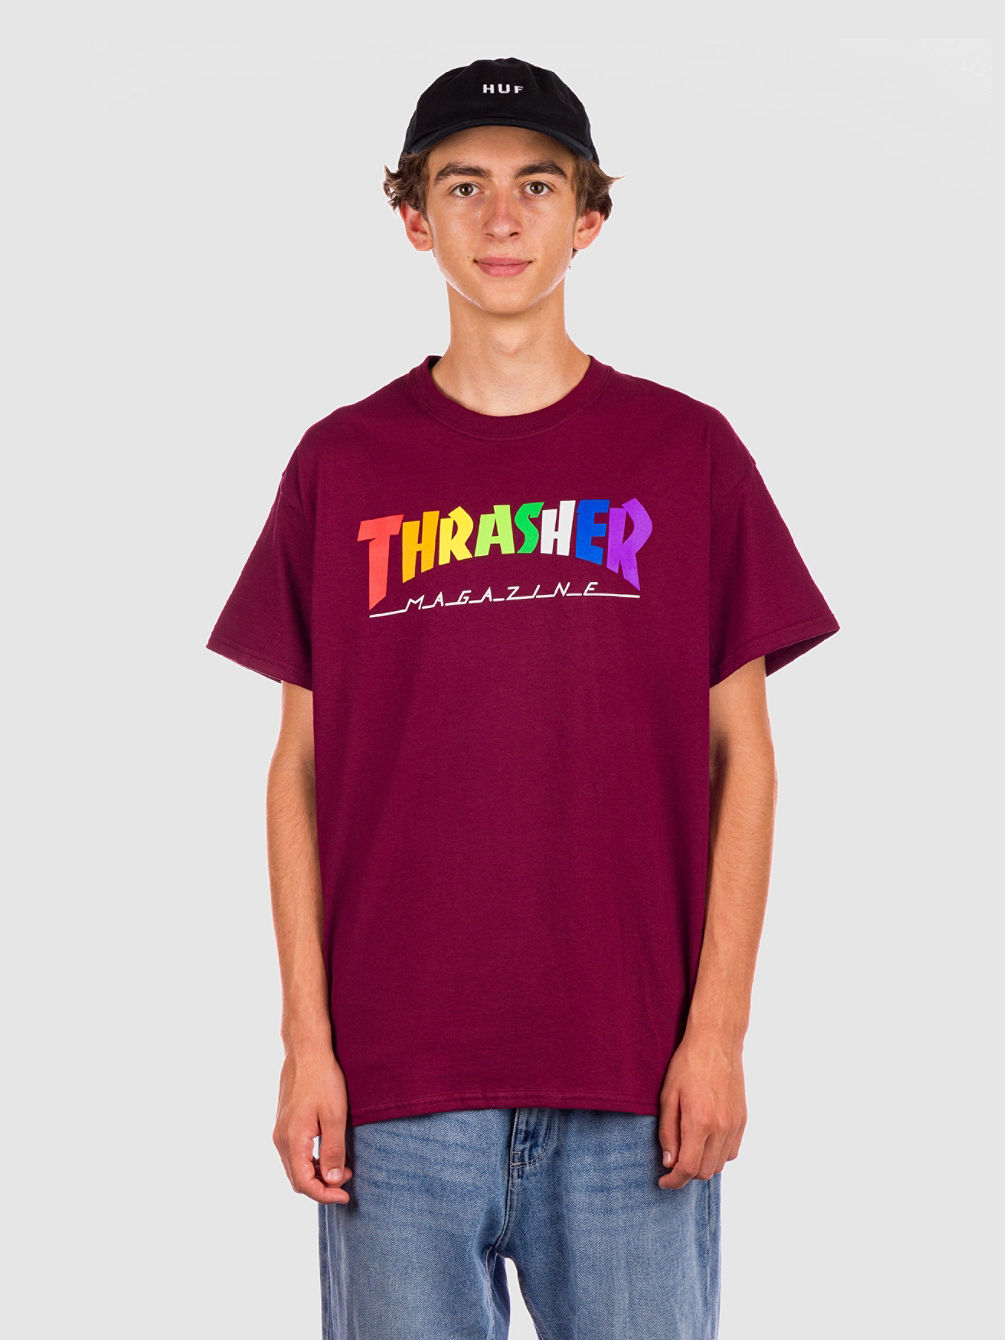 Rainbow Mag T-shirt